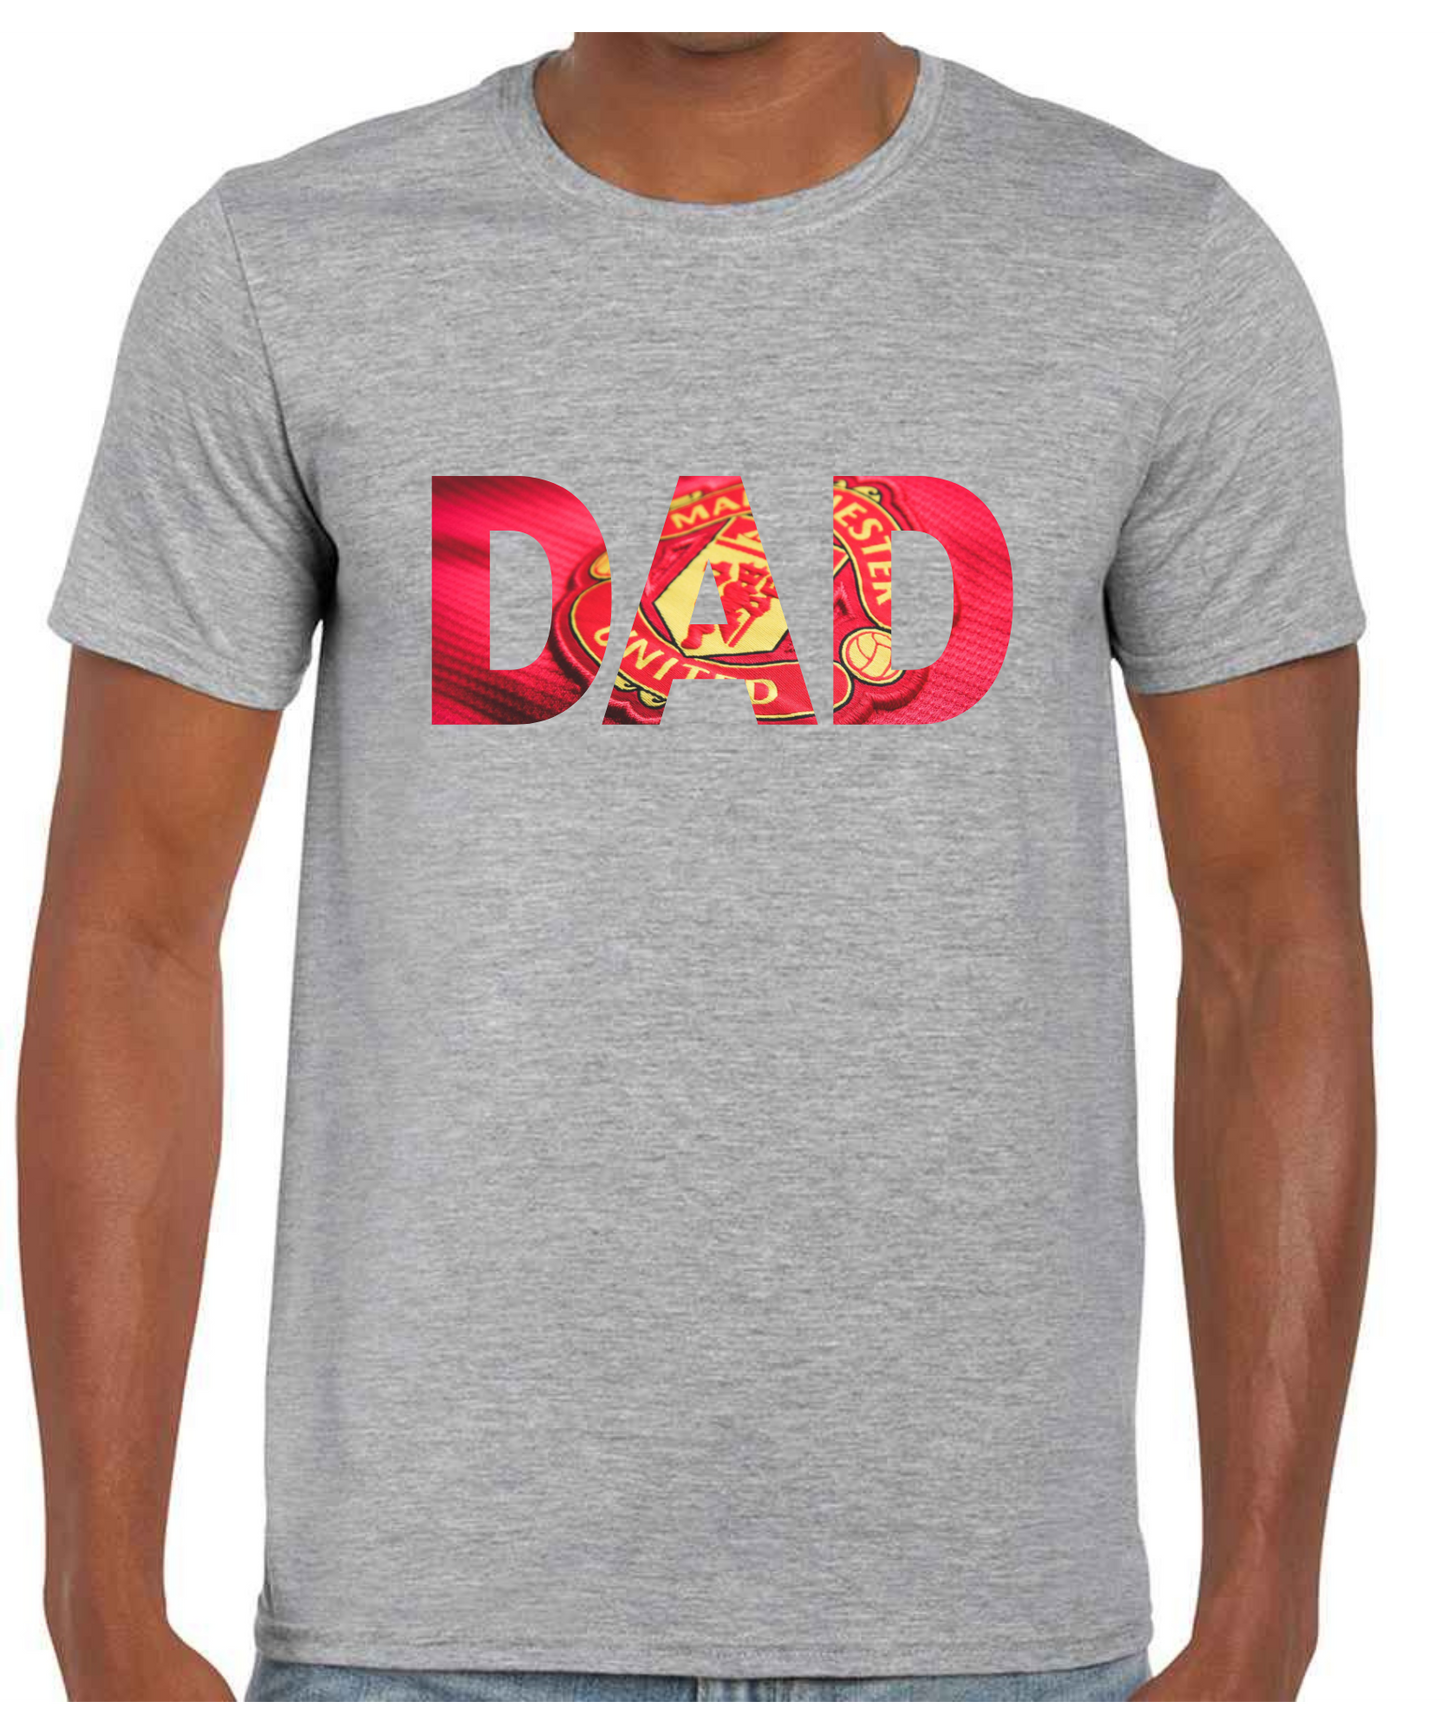 Man United - Dad T Shirt (White/Black/Grey)